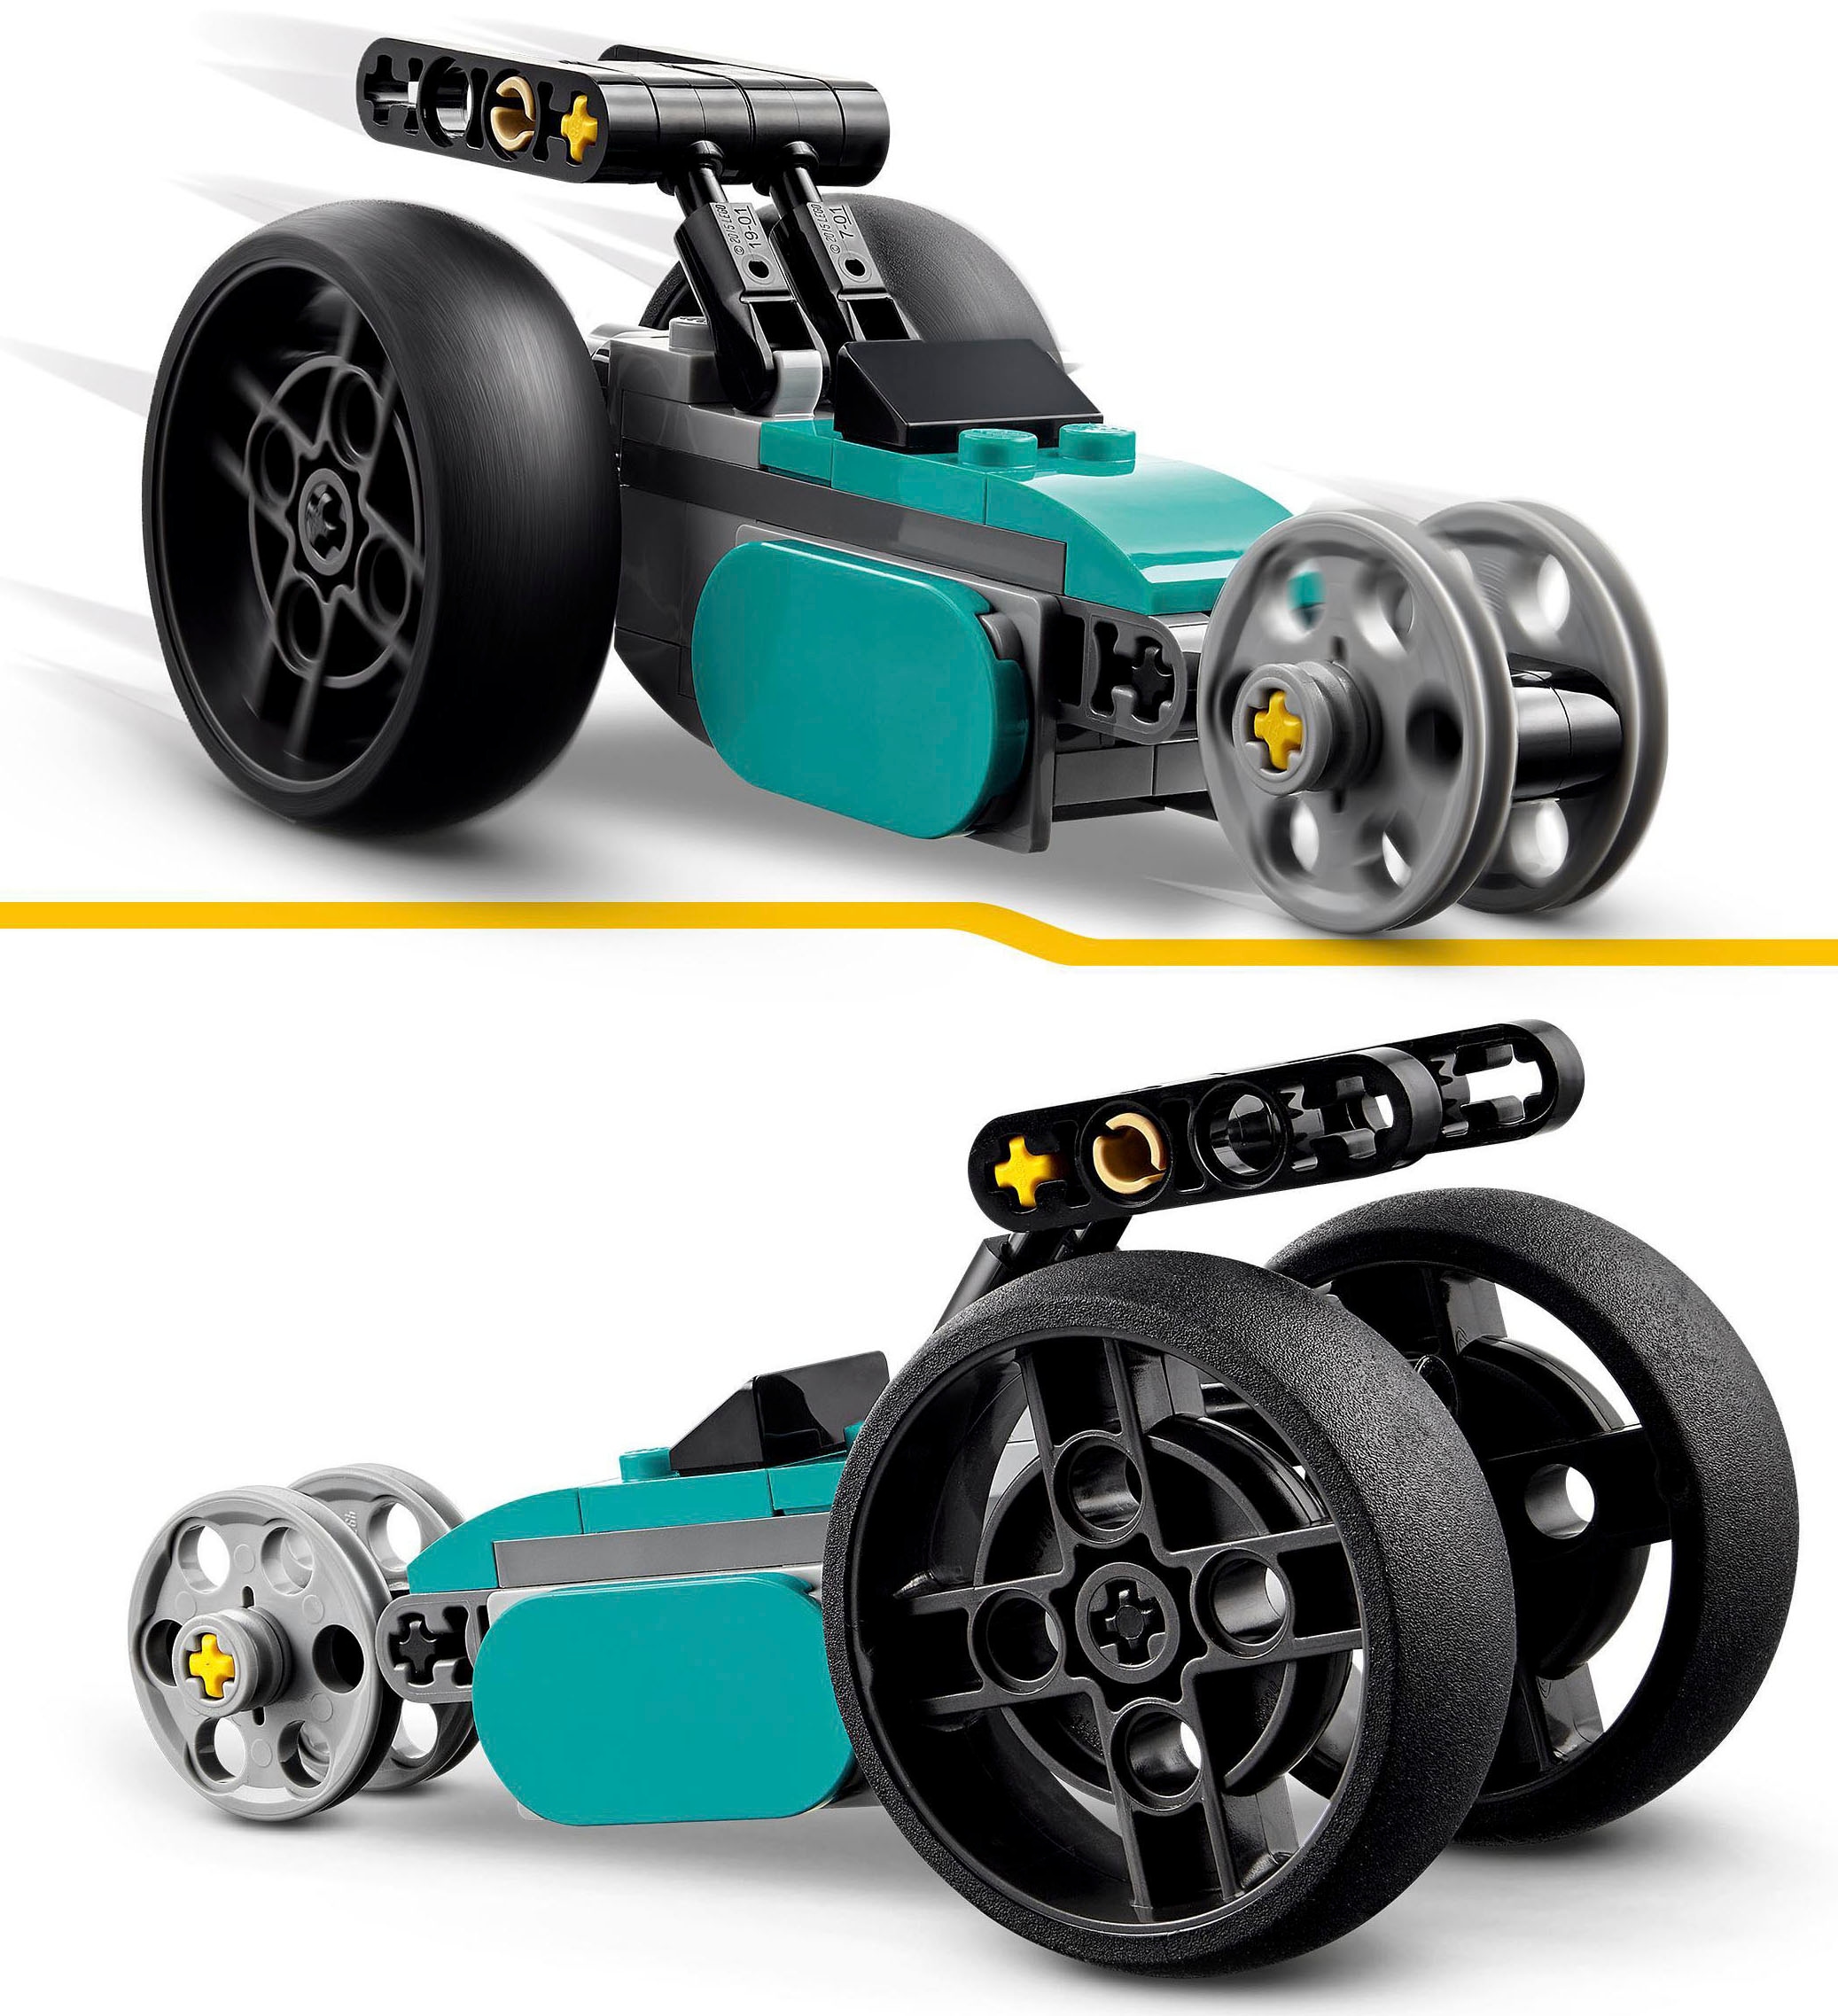 LEGO® Konstruktionsspielsteine »Oldtimer Motorrad (31135), LEGO® Creator 3in1«, (128 St.)